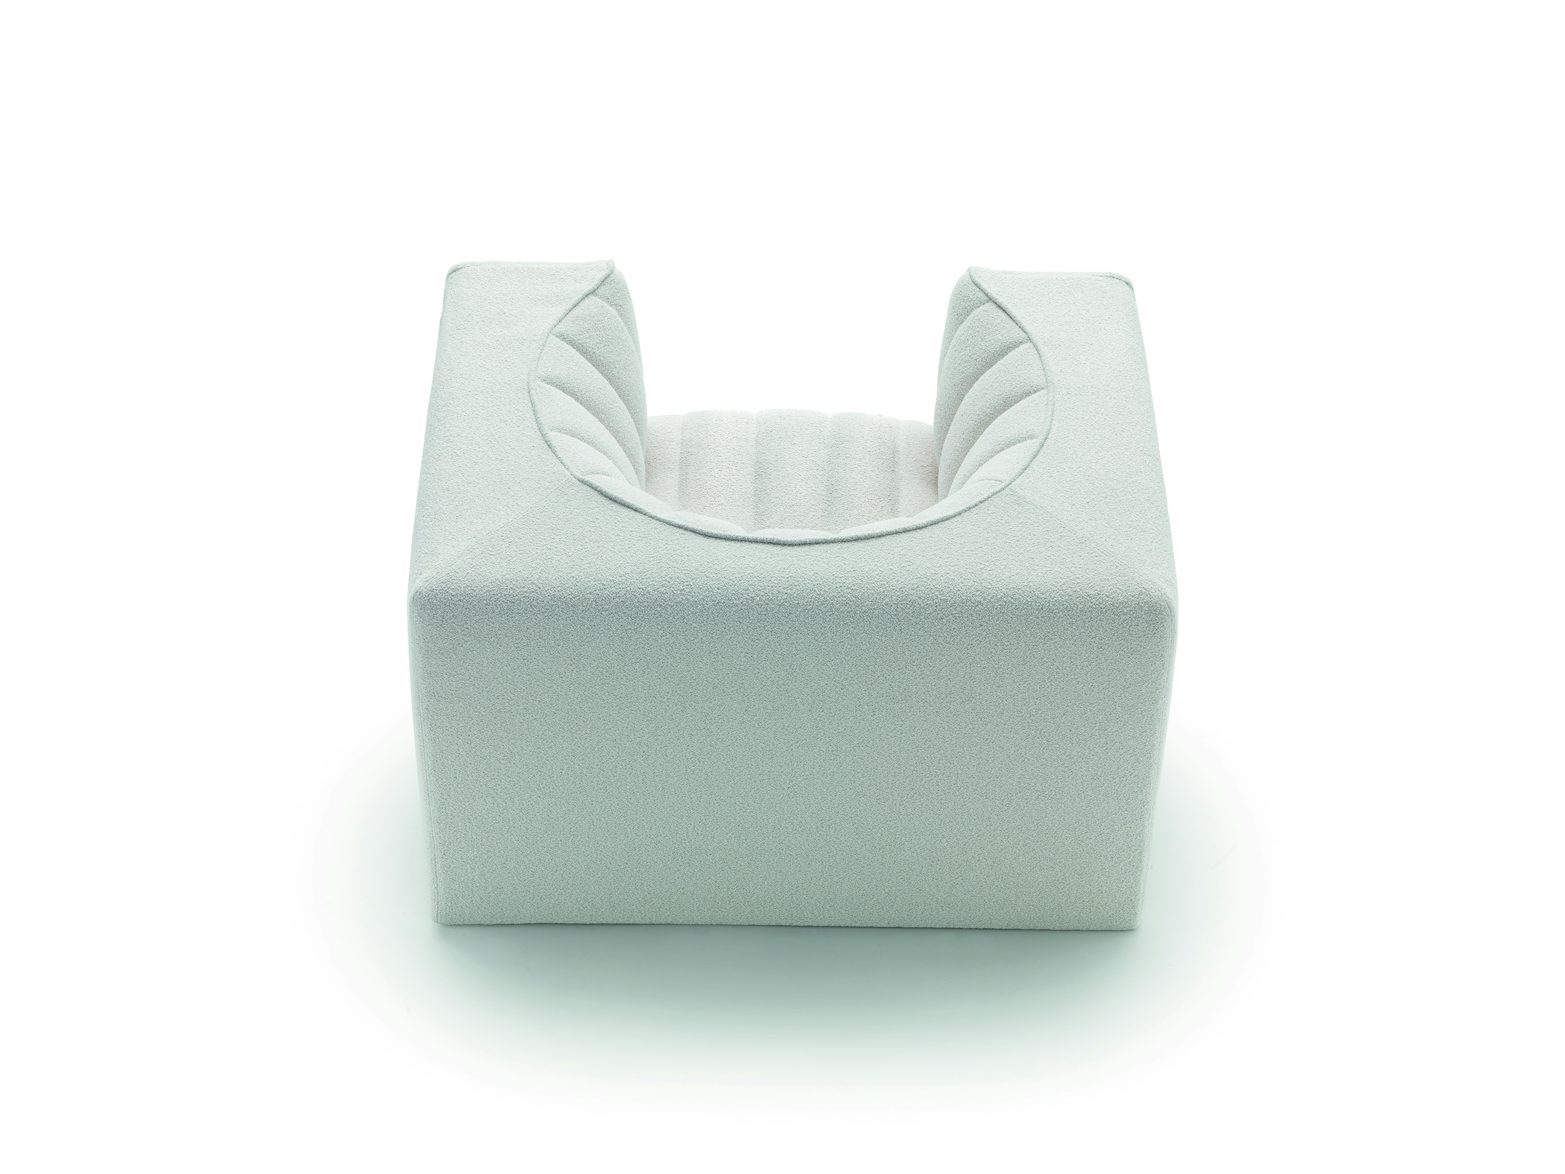 Arflex 9000 design Tito Agnoli armchair 9